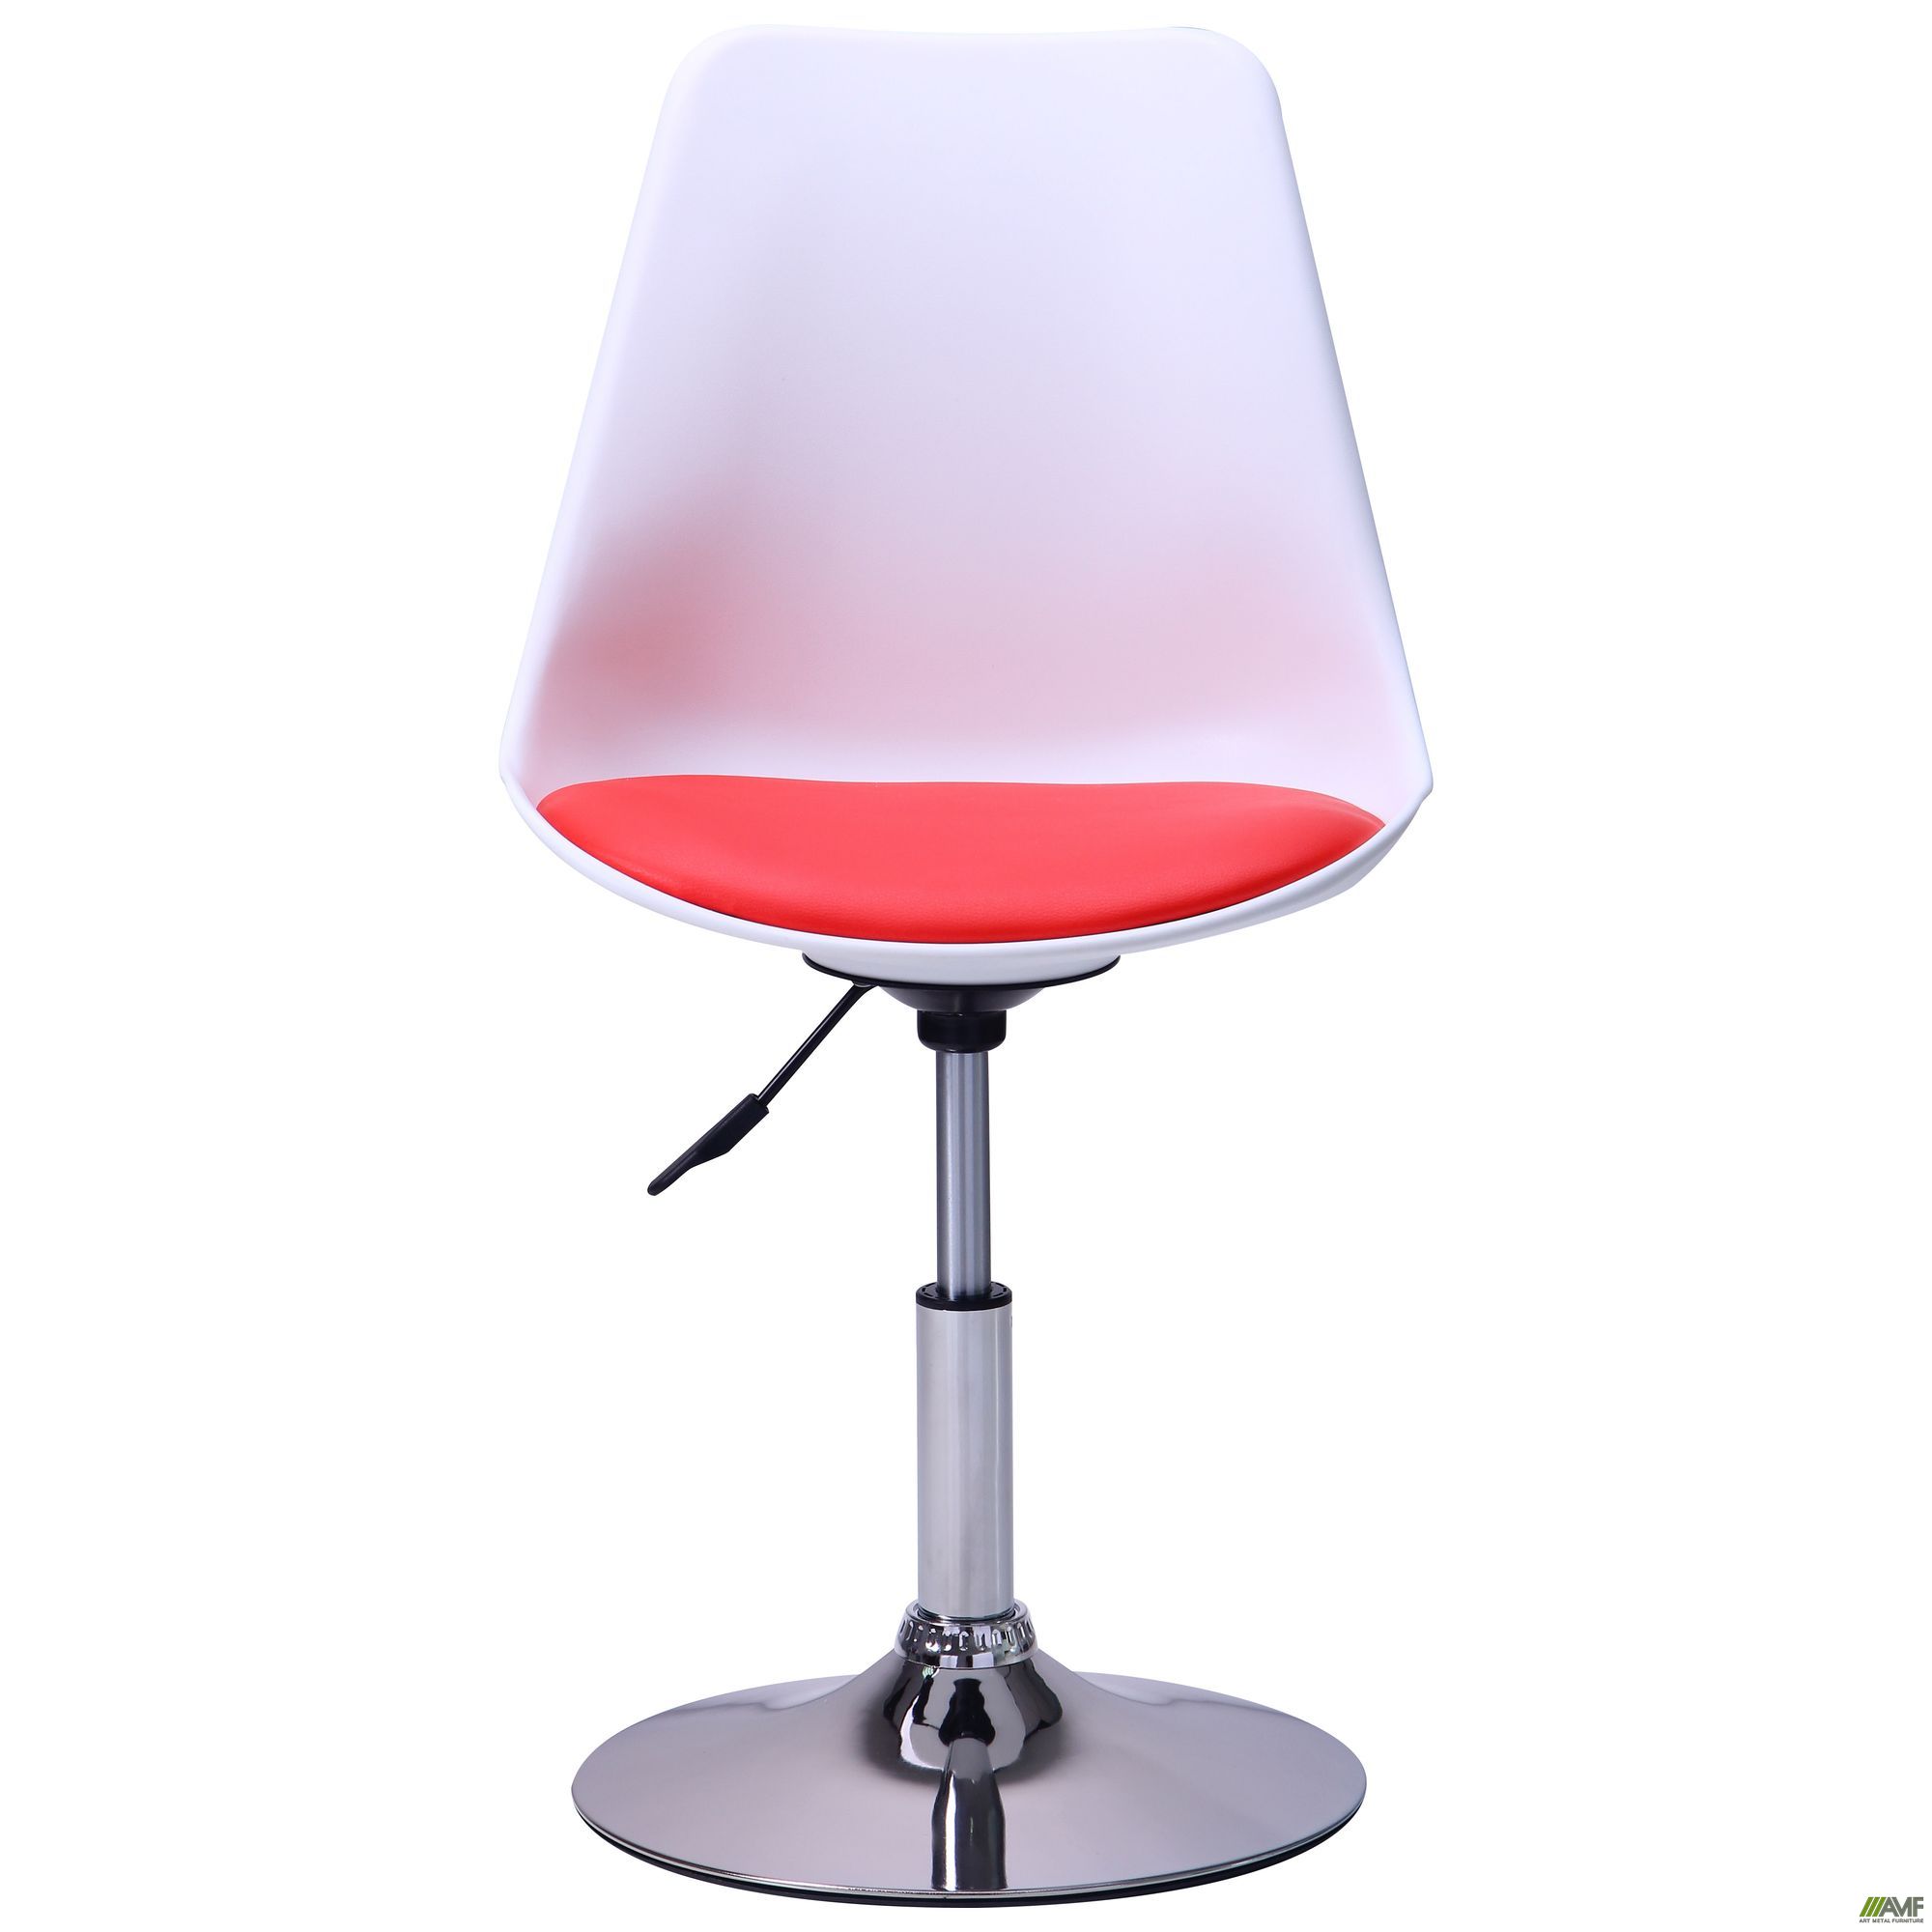 Фото 4 - Барный стул Aster chrome белый+красный 